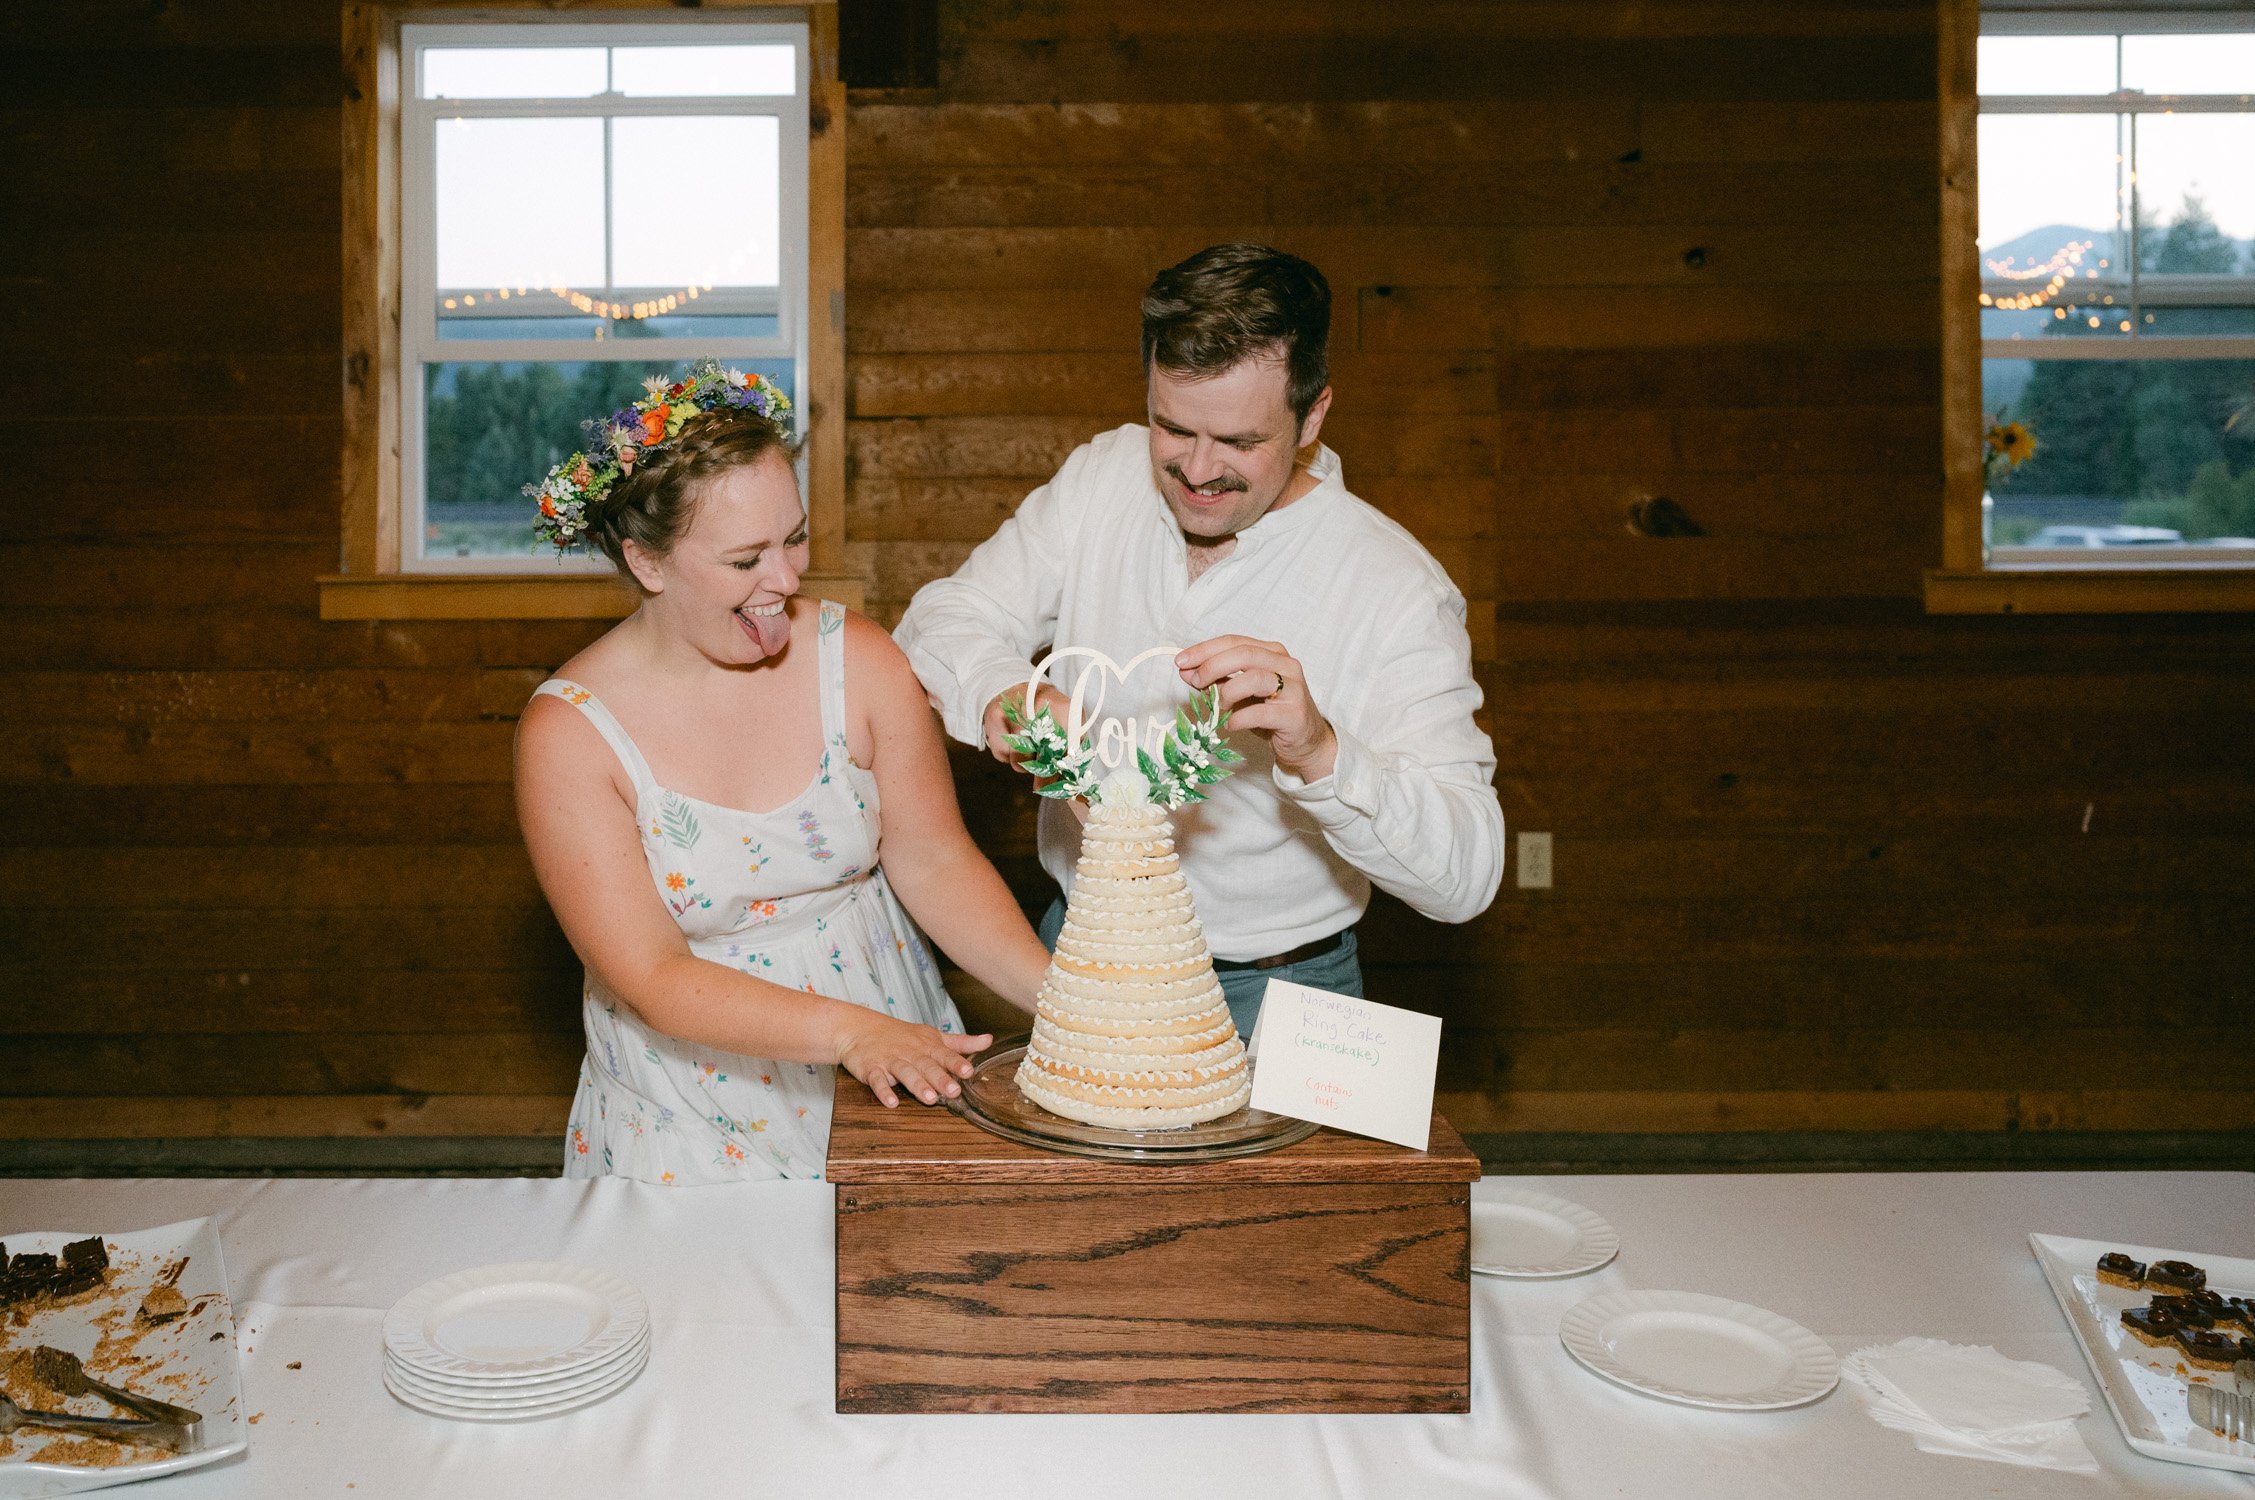 graeagle corner barn wedding, photo of the newlywed couple slicing their wedding cake